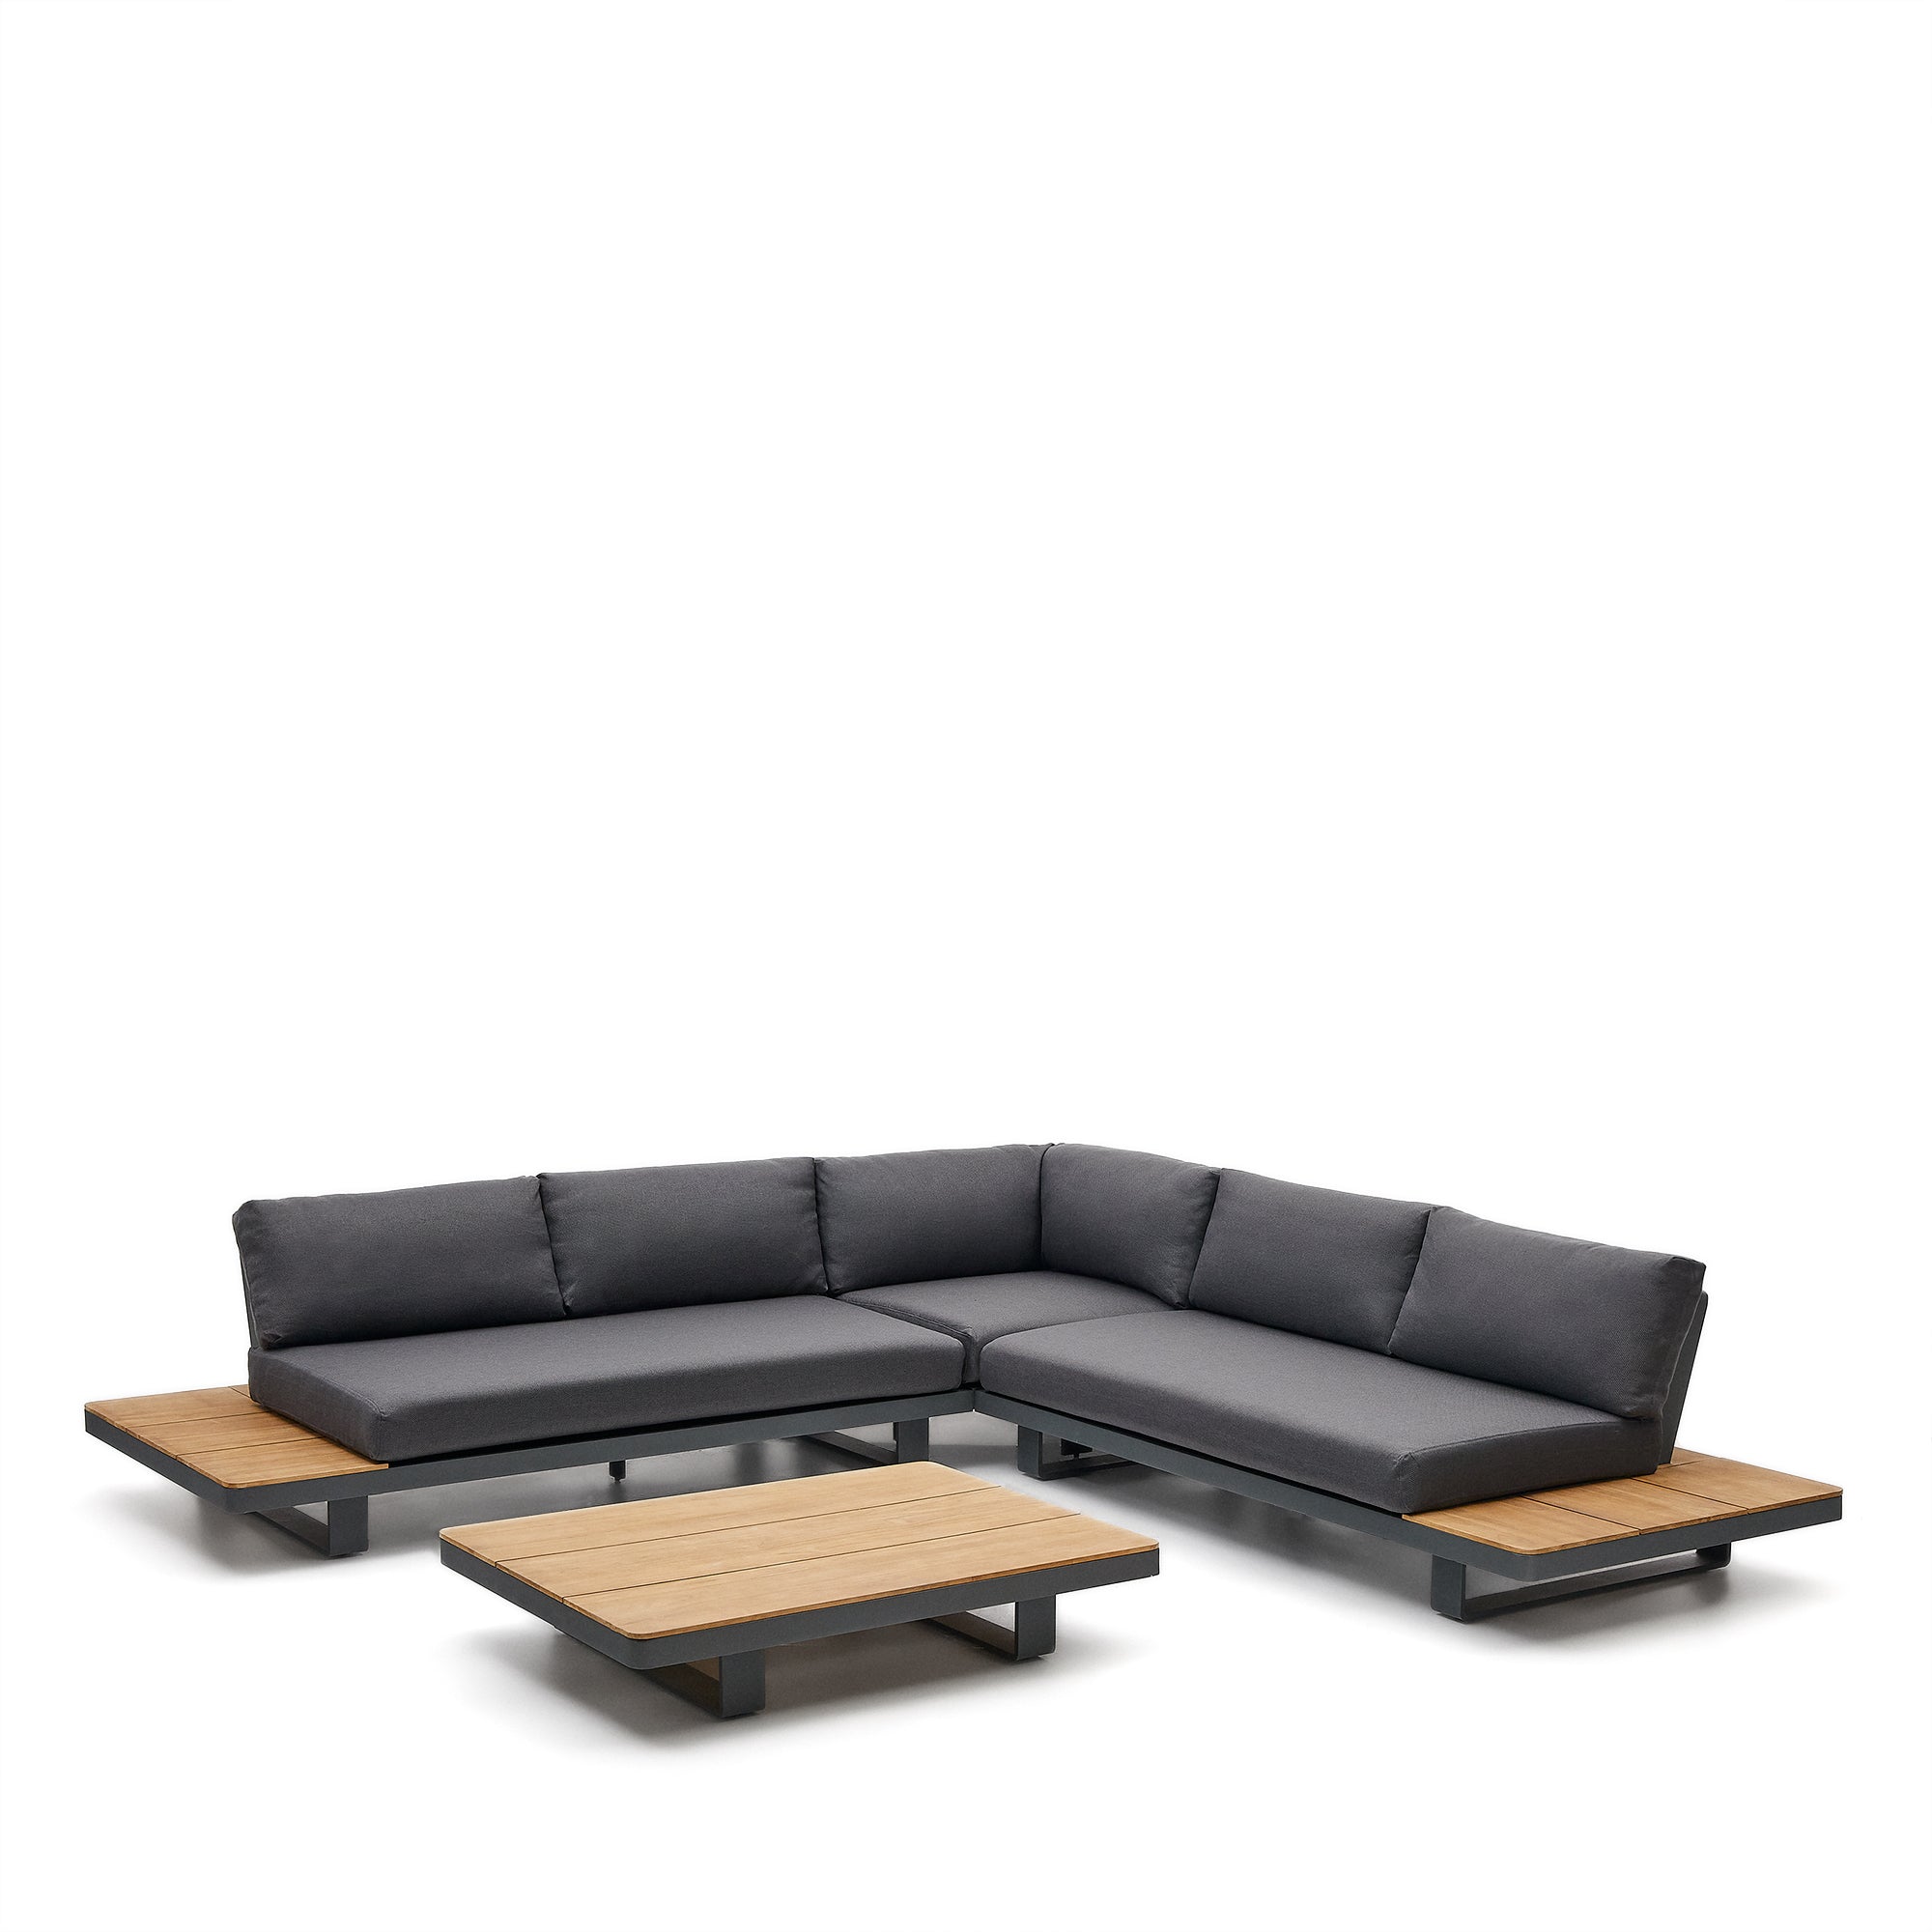 Tosqueta 5-seat corner sofa and table set in aluminum and solid teak, 100% FSC